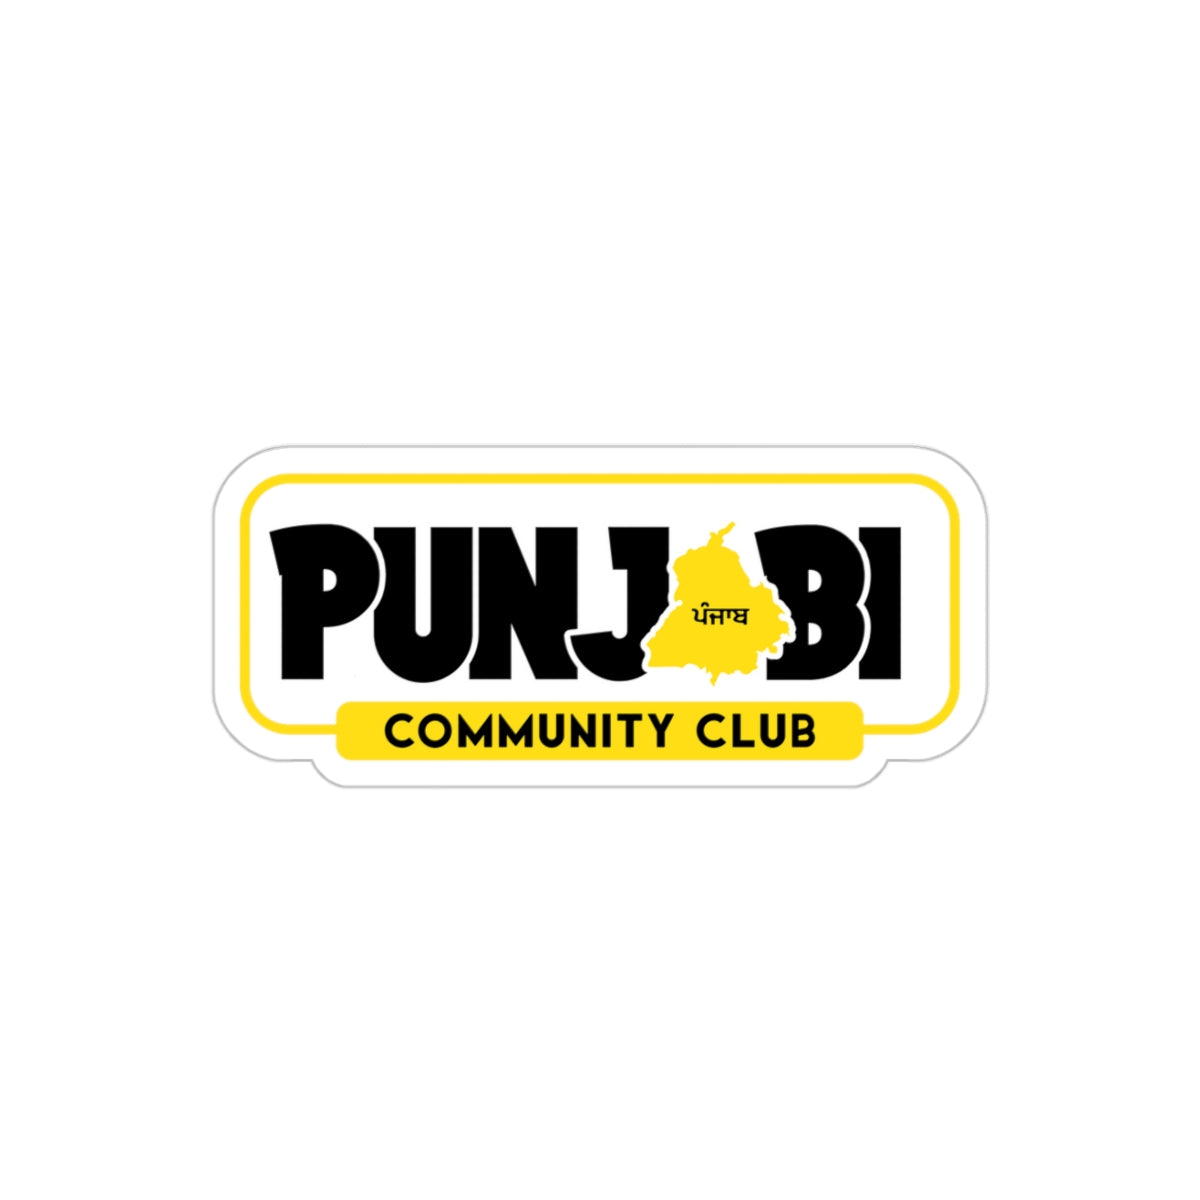 Punjabi Community Club - Transparent Outdoor Sticker, 1pcs